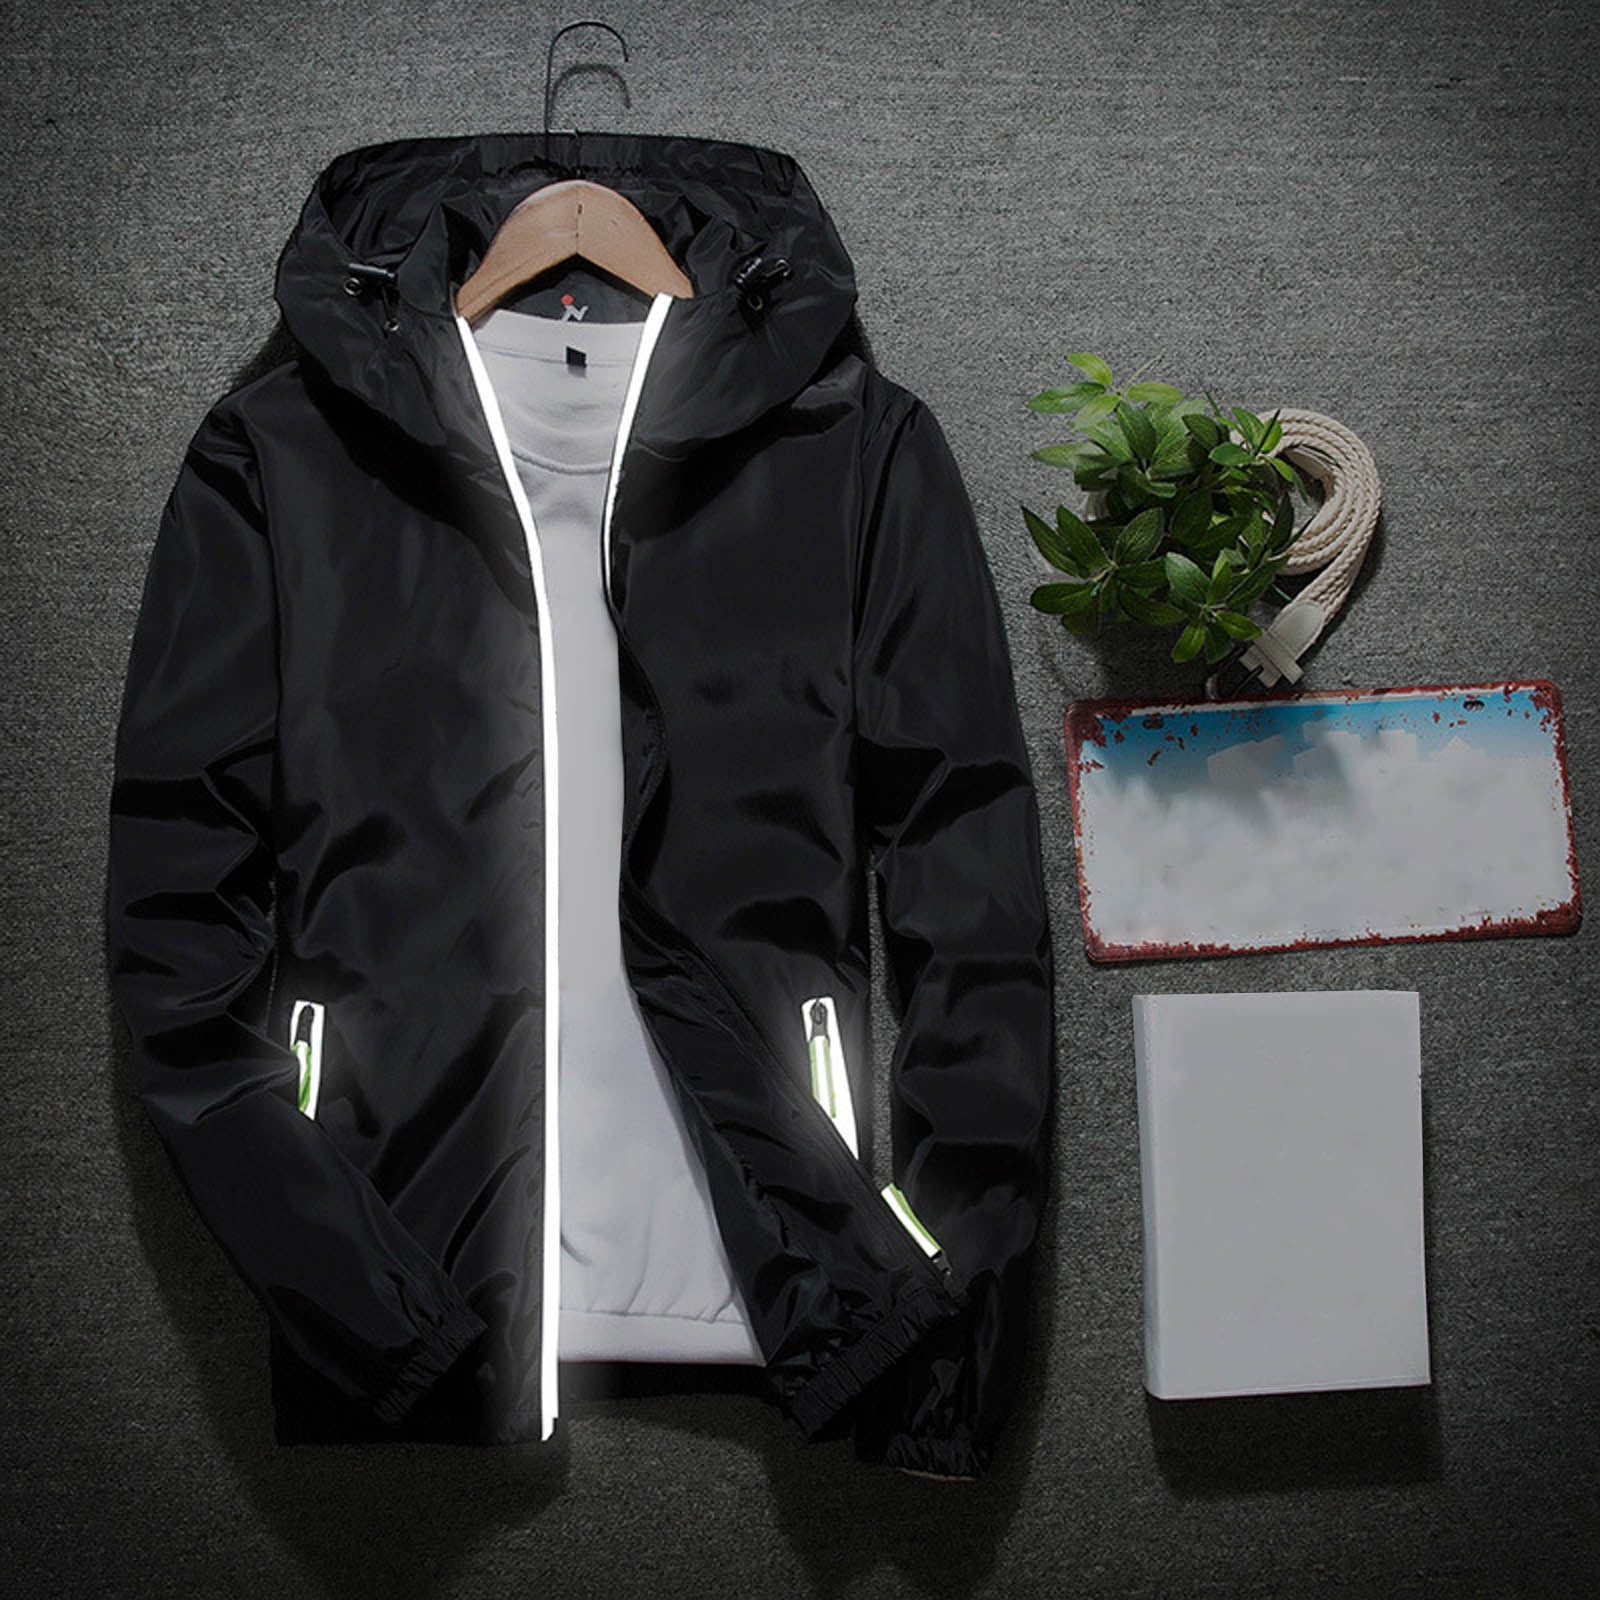 YanHoo Fall Deals Outdoor Winter Ski Jacket Windbreaker Zip Up Oversized Hooded Rain Coat for Traveling Hiking - Walmart.com